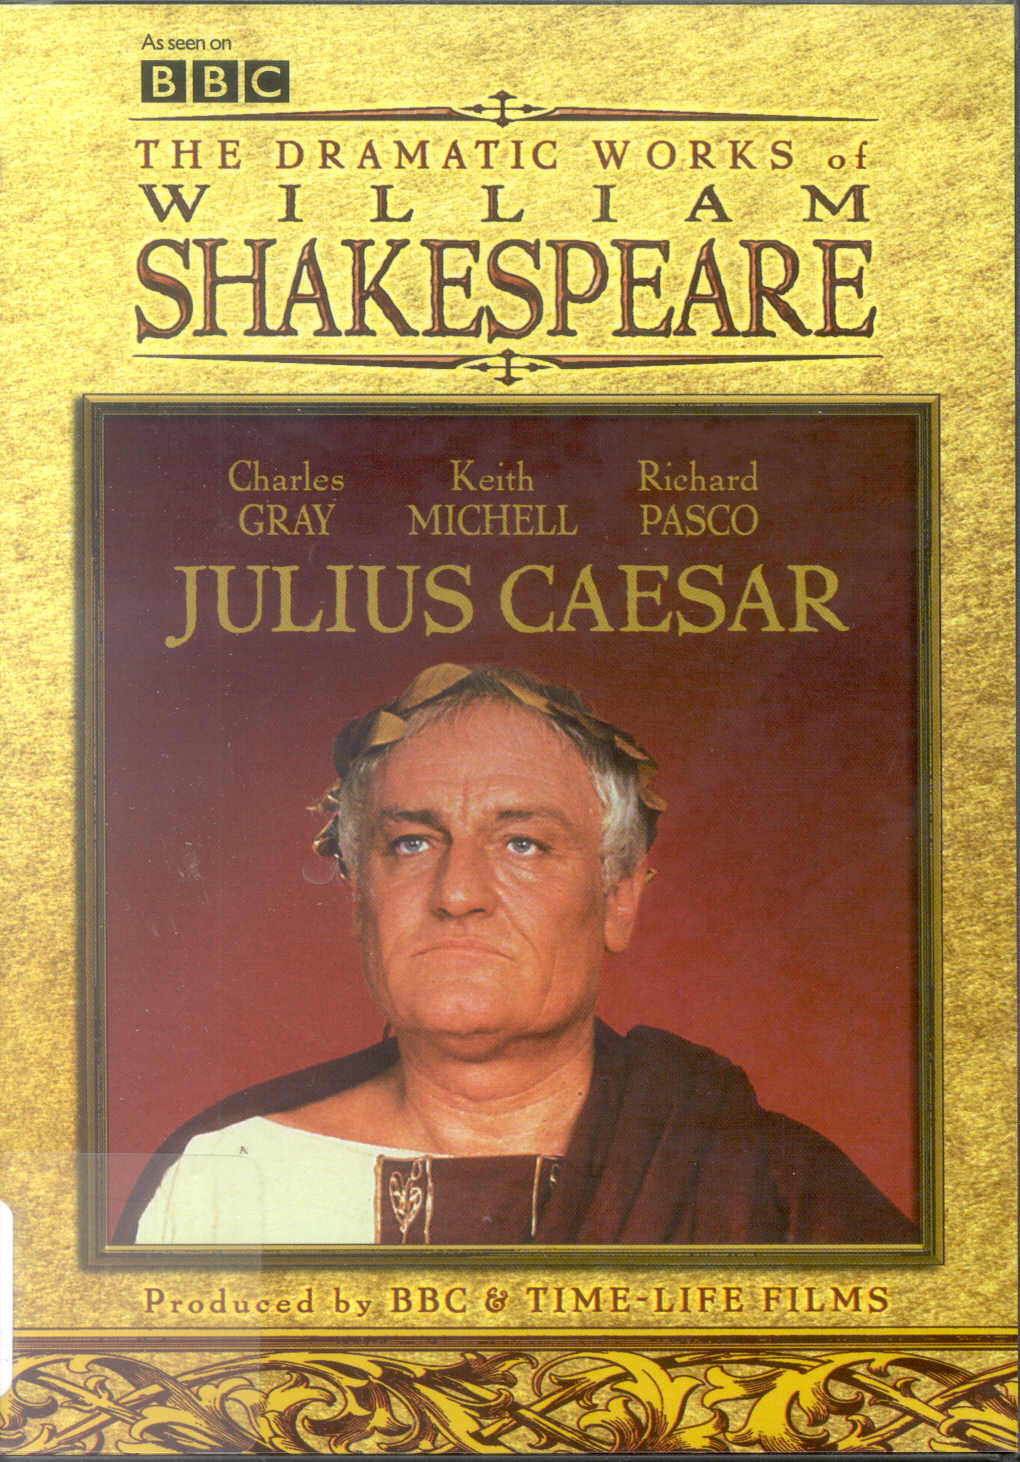 [15+DVD+-+Julius+Caesar+(BBC).jpg]